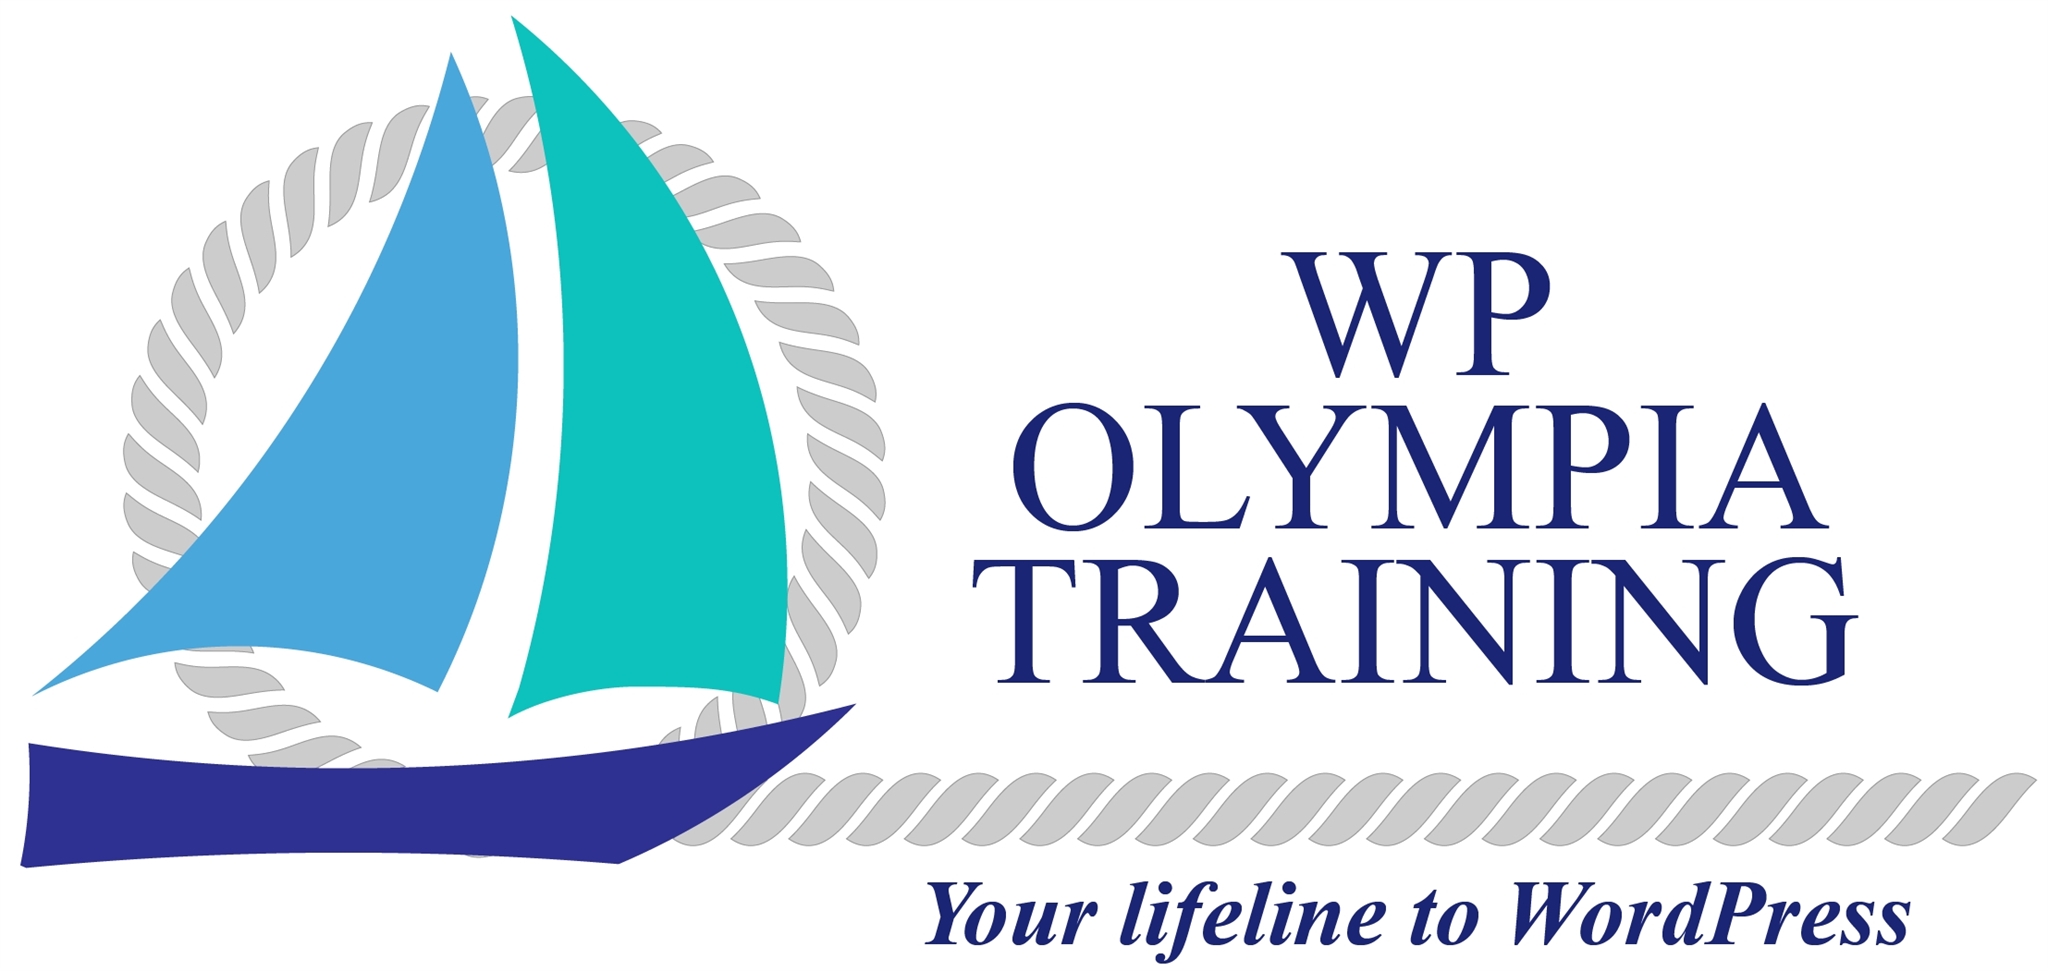 WP Olympia Training